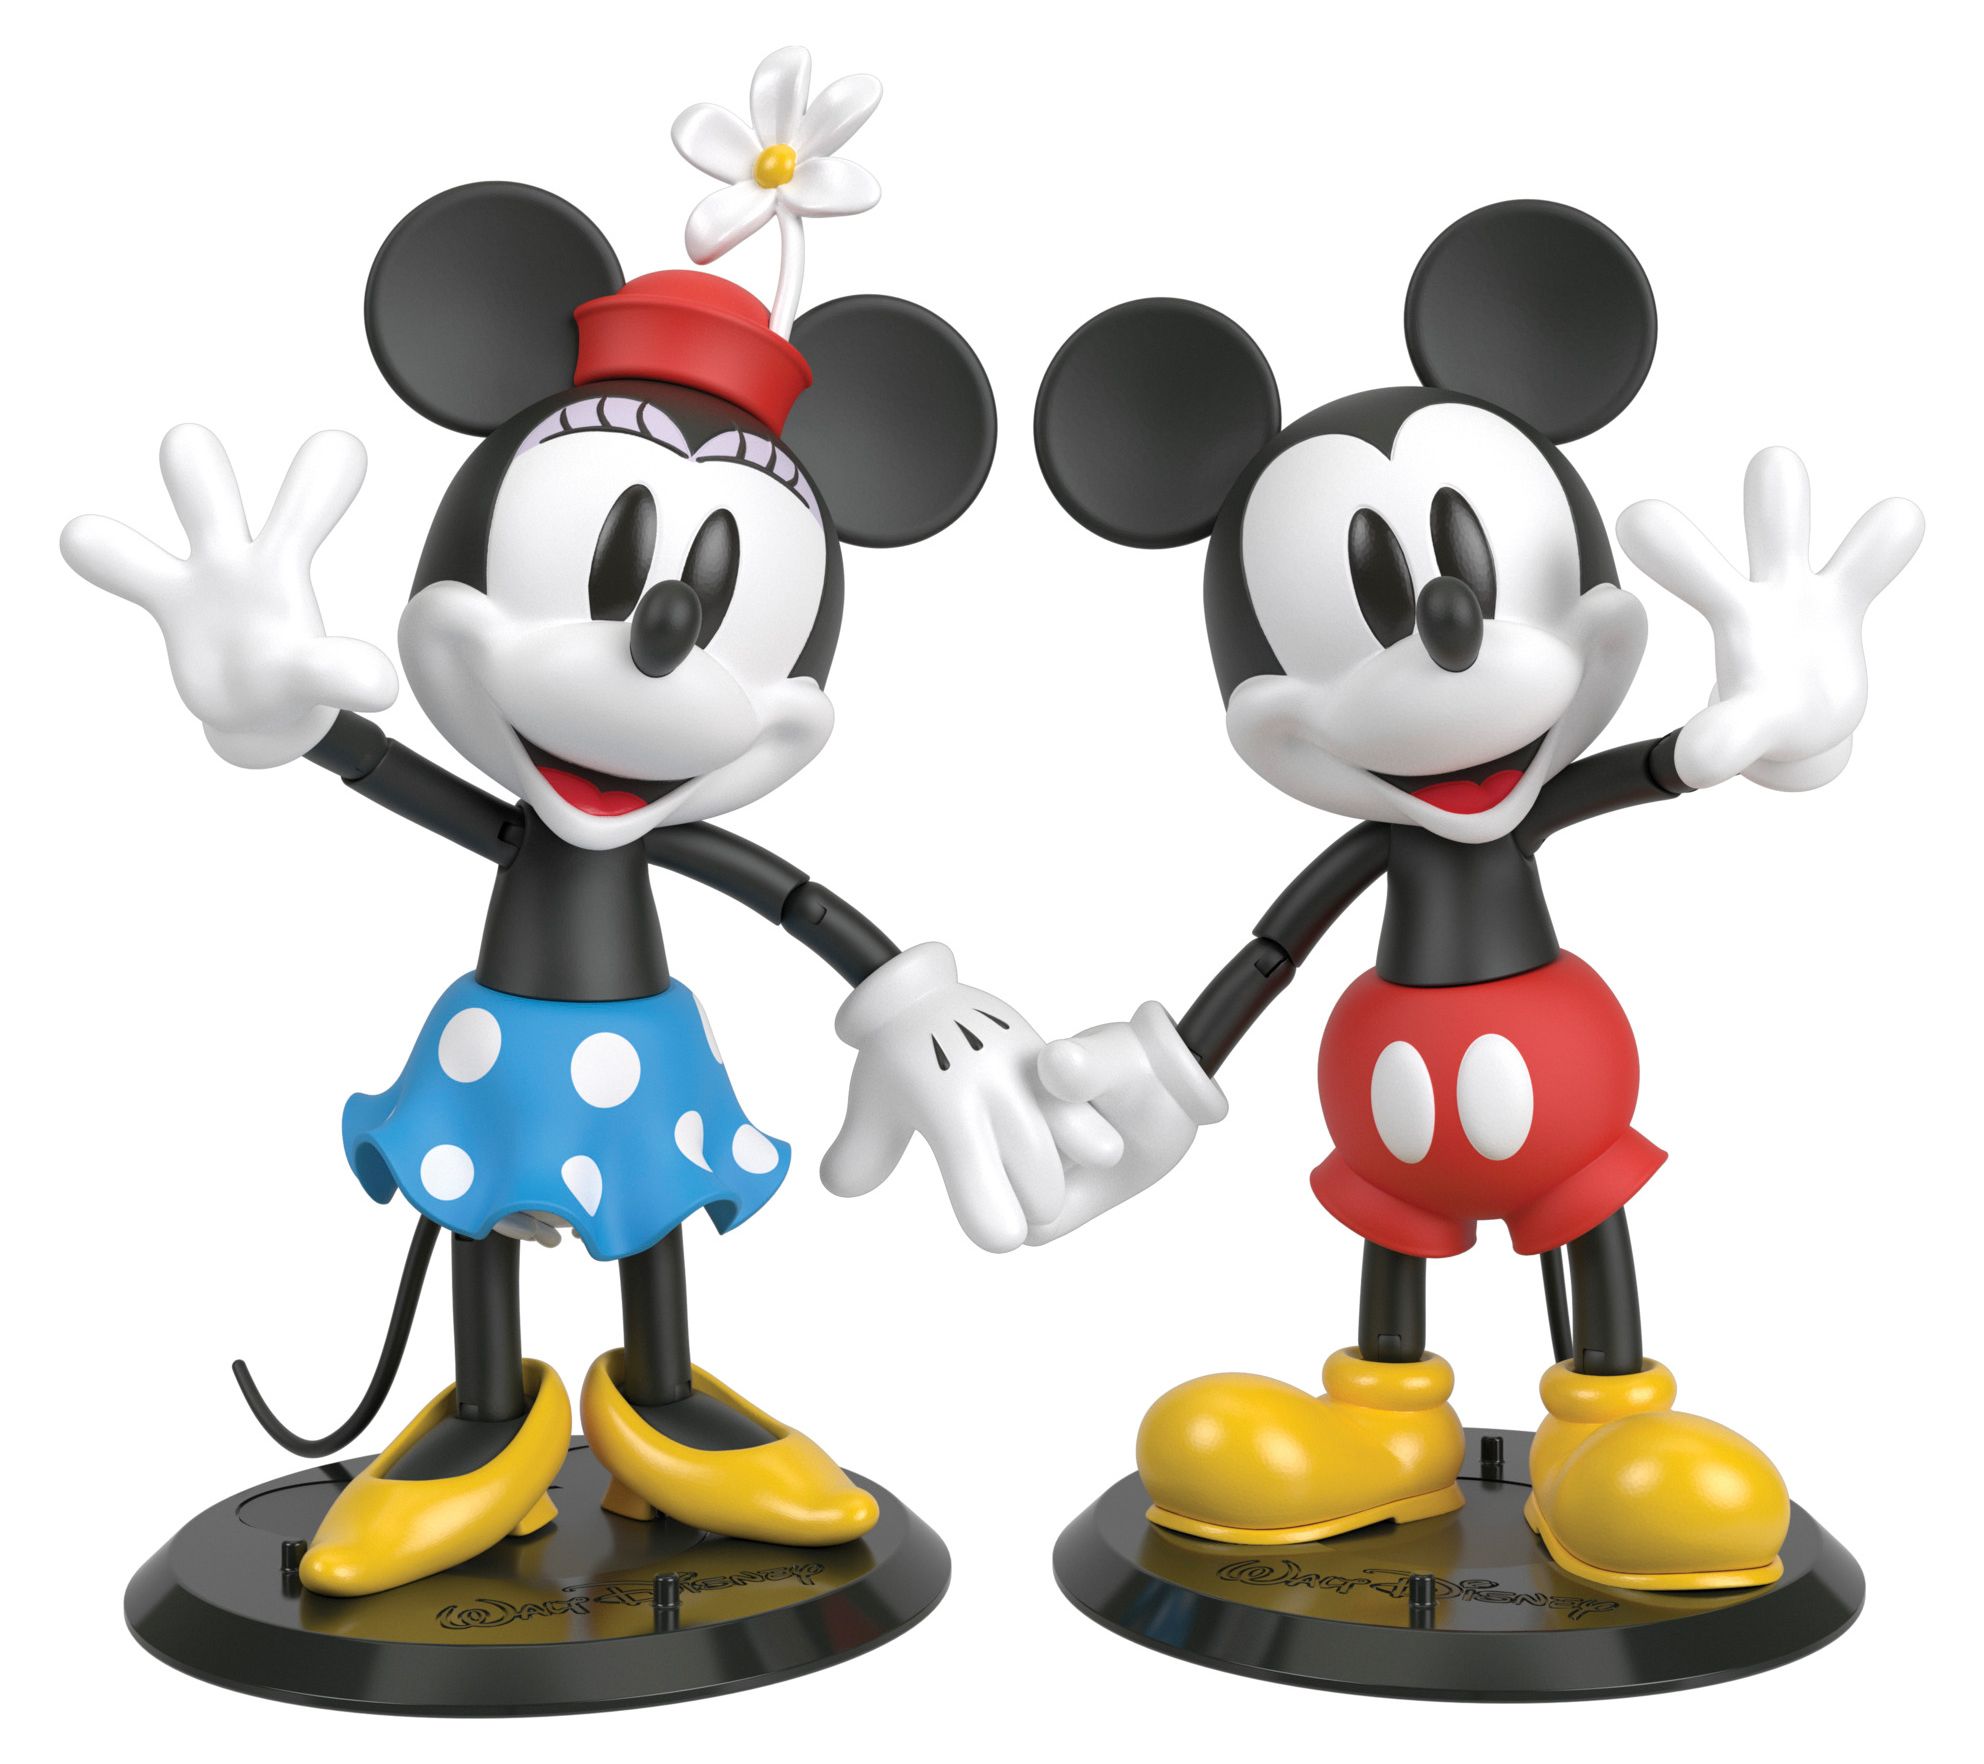 Figurine Minnie 14cm Mattel 2013, Walt Disney, Mickey, Dessin